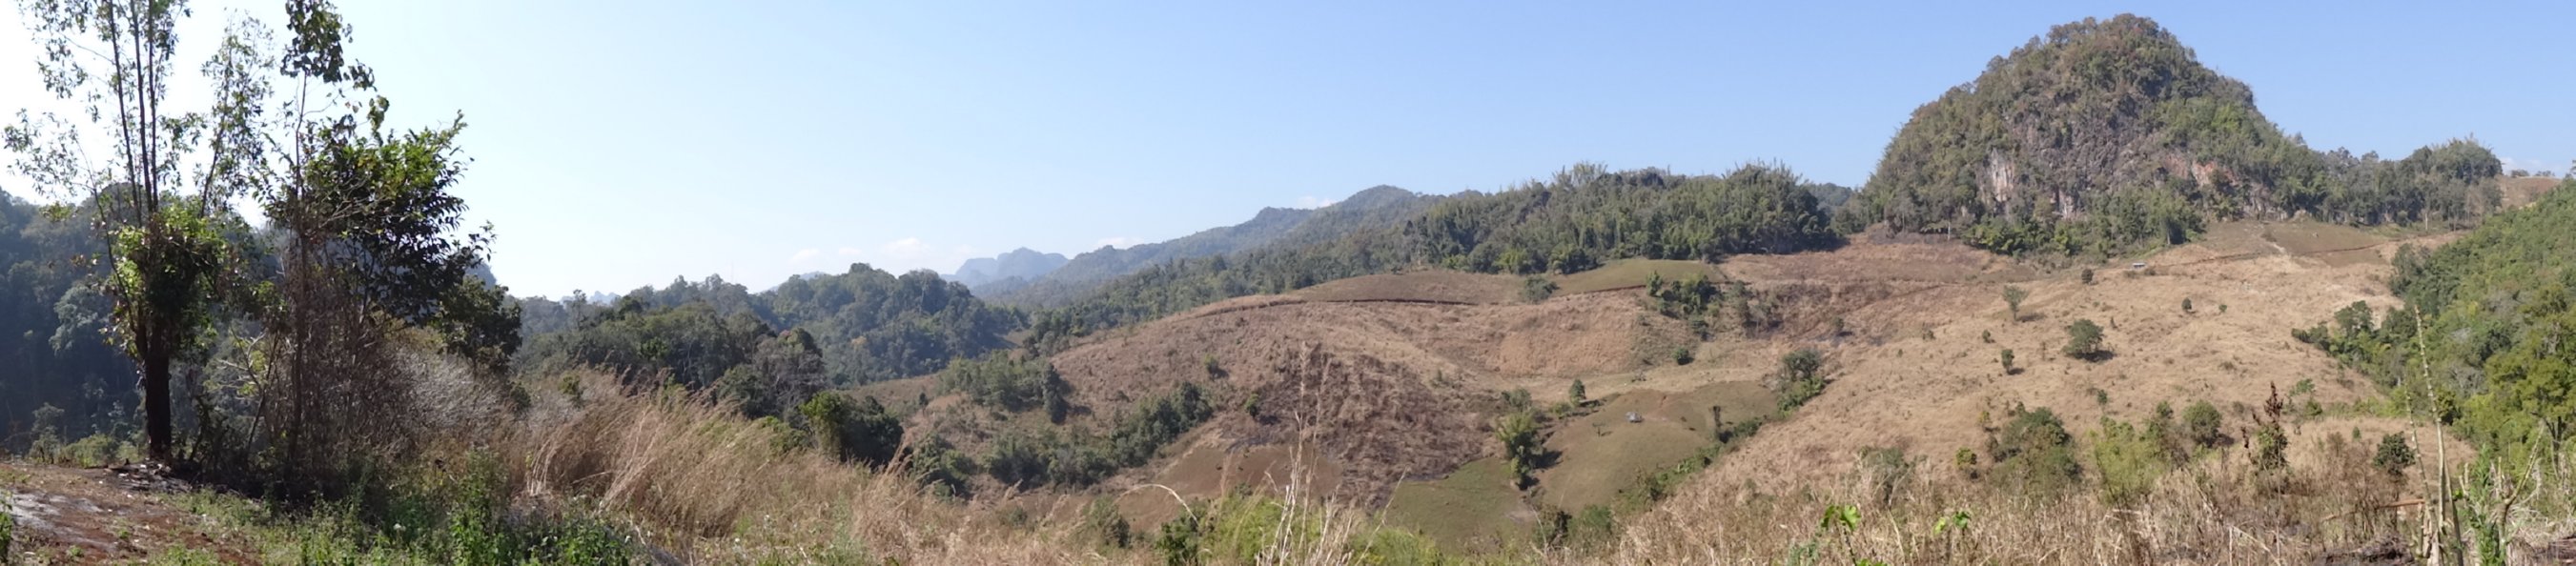 Pang Mapha - landschap